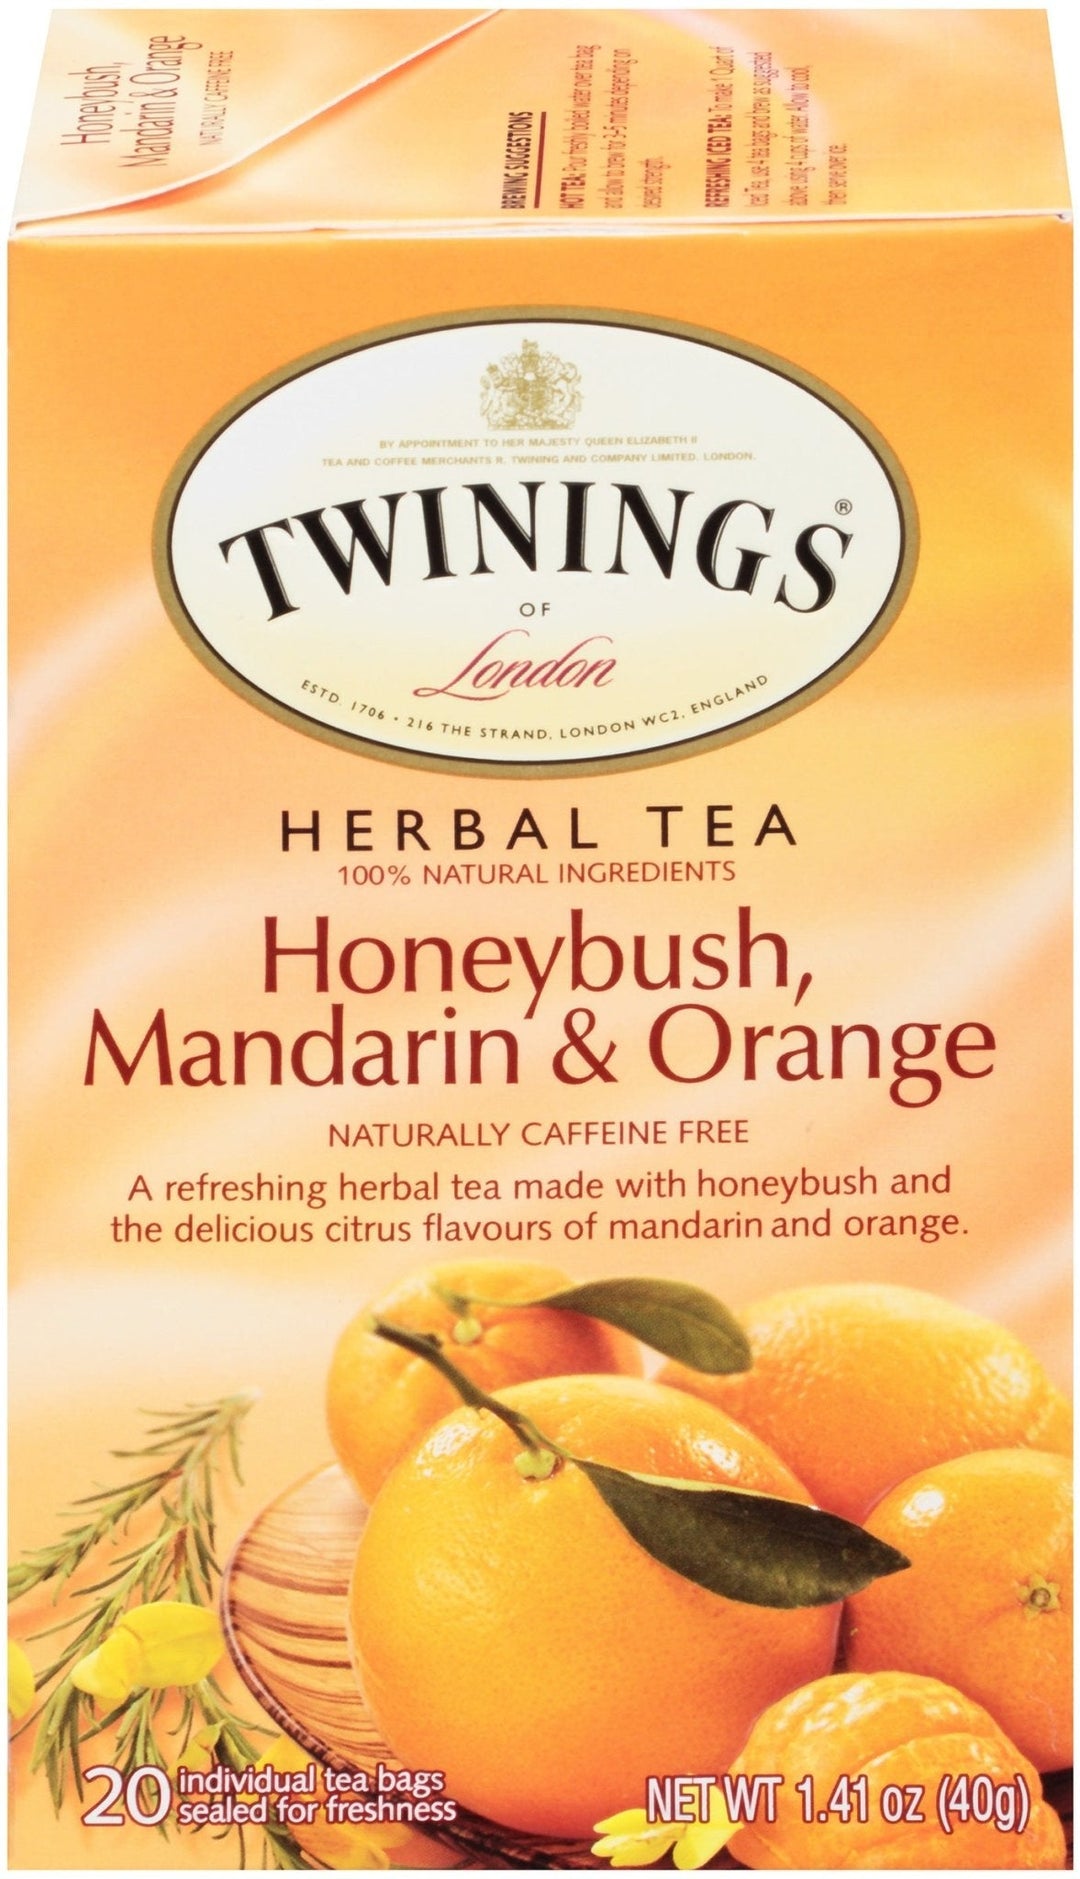 Twinings Honeybush, Mandarin & Orange Tea, 20-Count Box